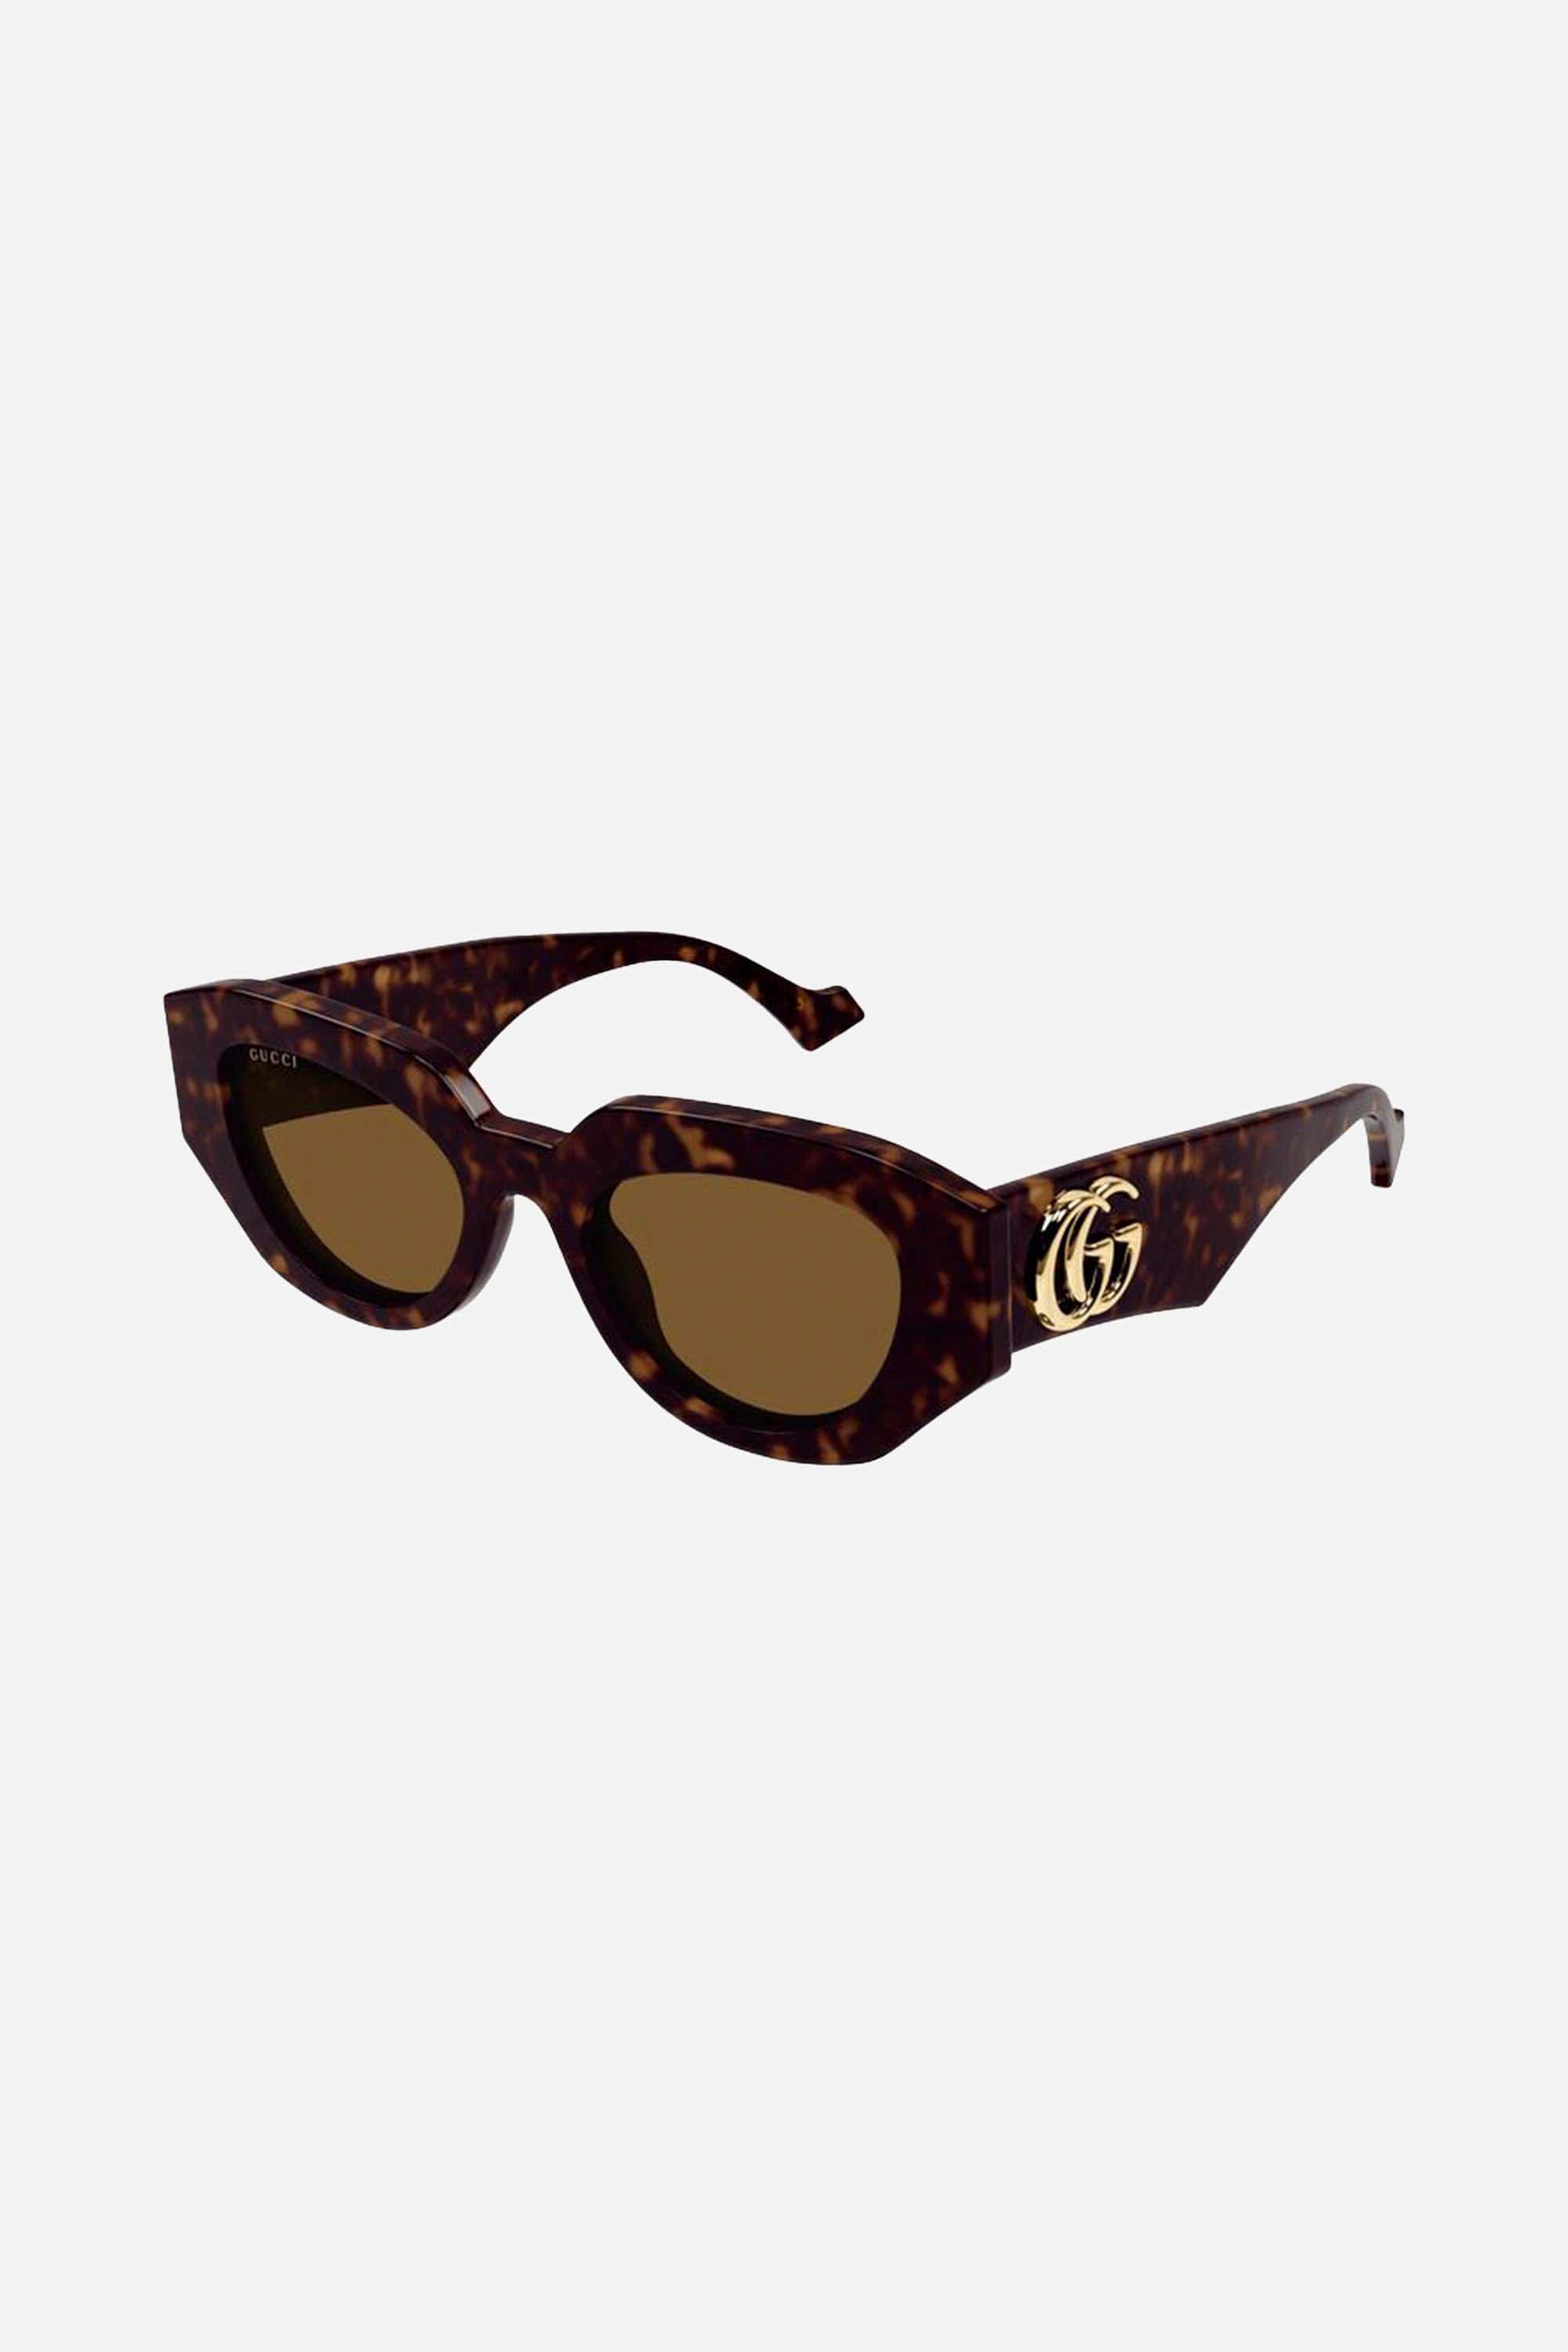 Gucci havana round chuncky sunglasses - Eyewear Club